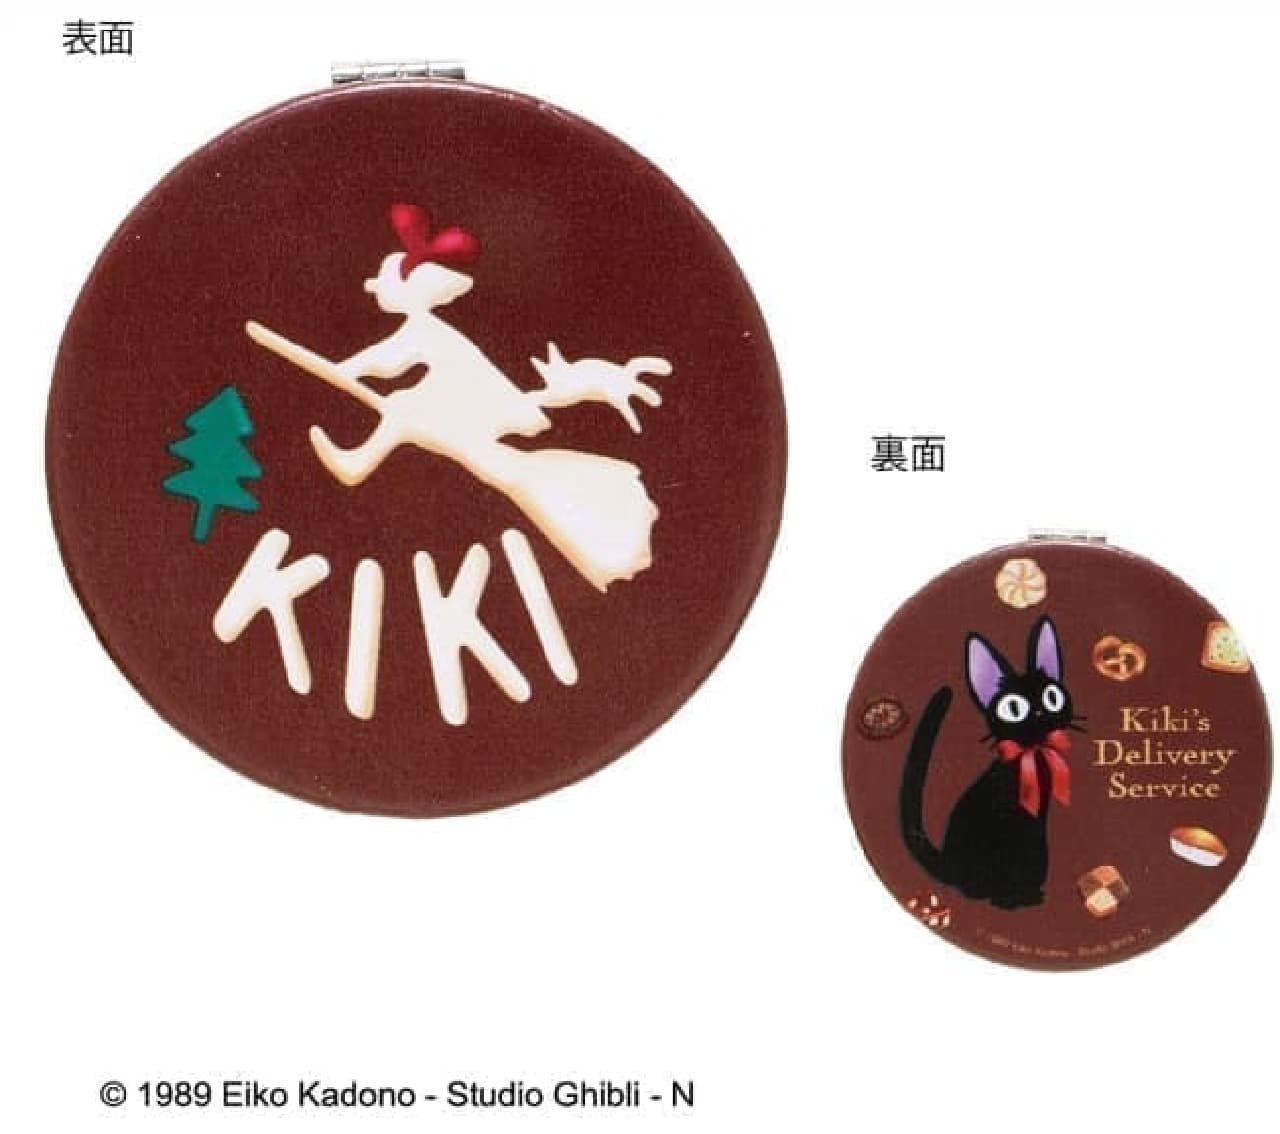 New product "Kiki chocolate cake series" from Donguri Closet of the Donguri Republic